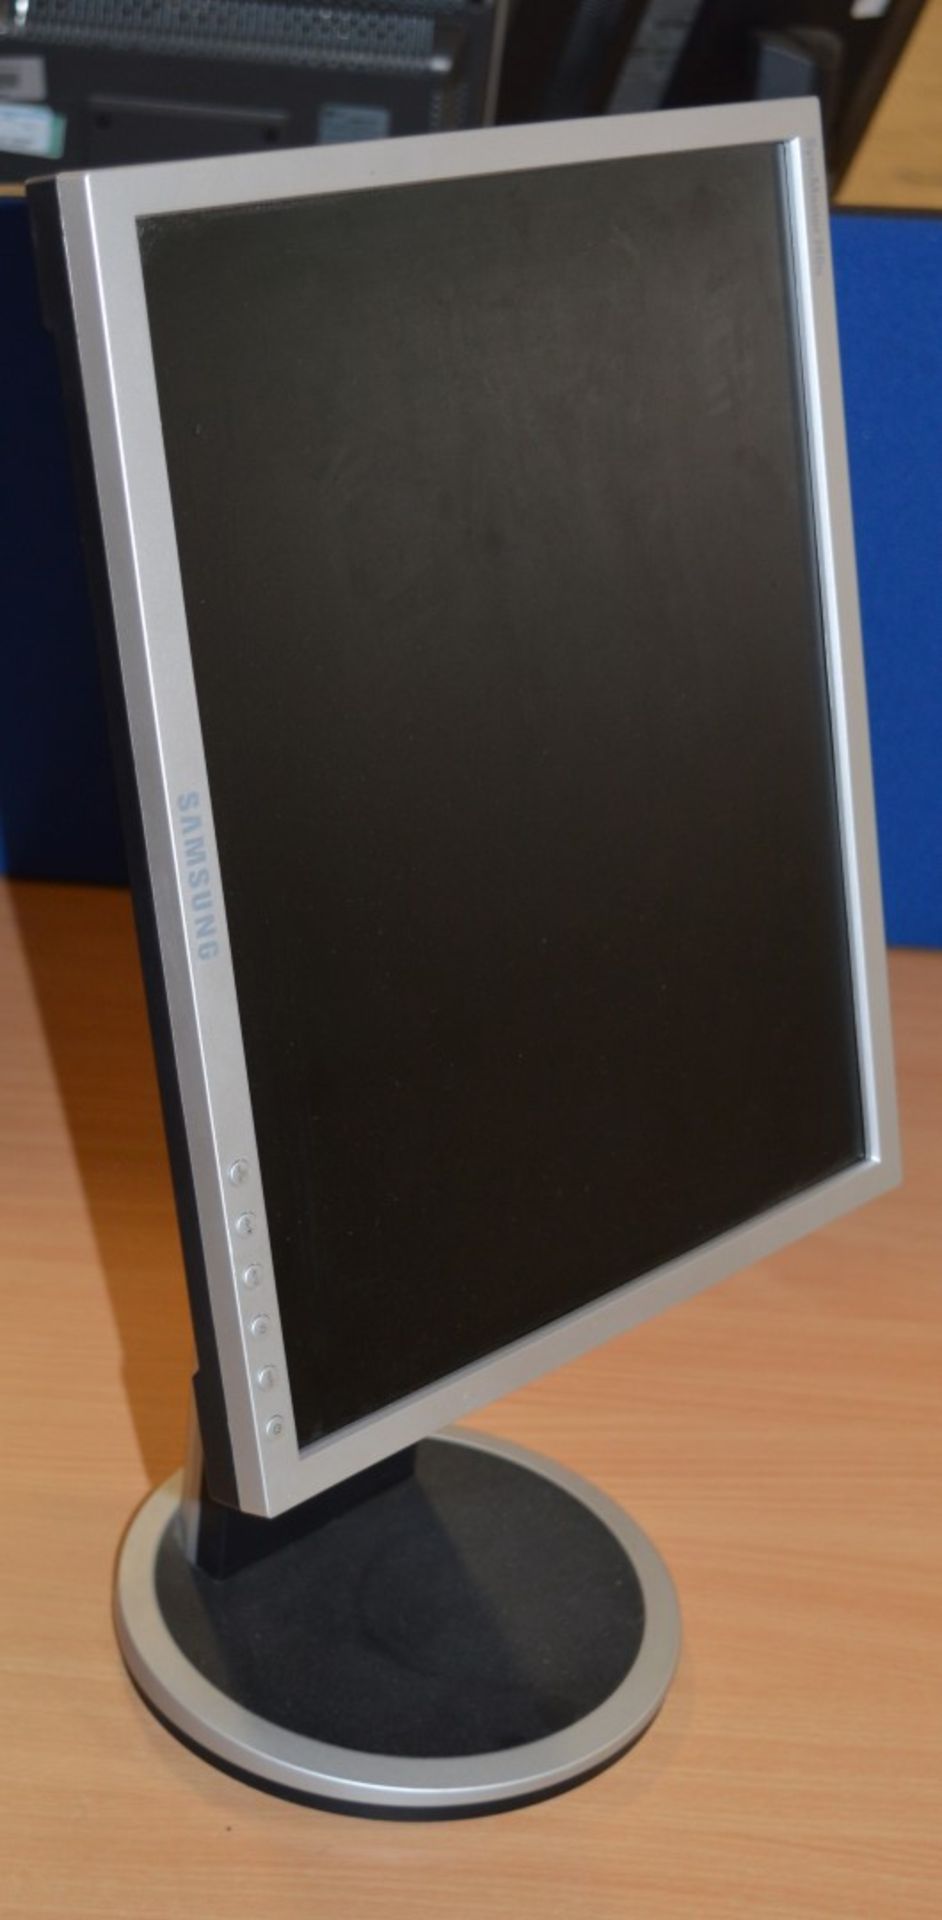 1 x Samsung Syncmaster 740N Flatscreen LCD Monitor - 17 Inch Screen Size - 1280 x 1024 Native - Image 2 of 5